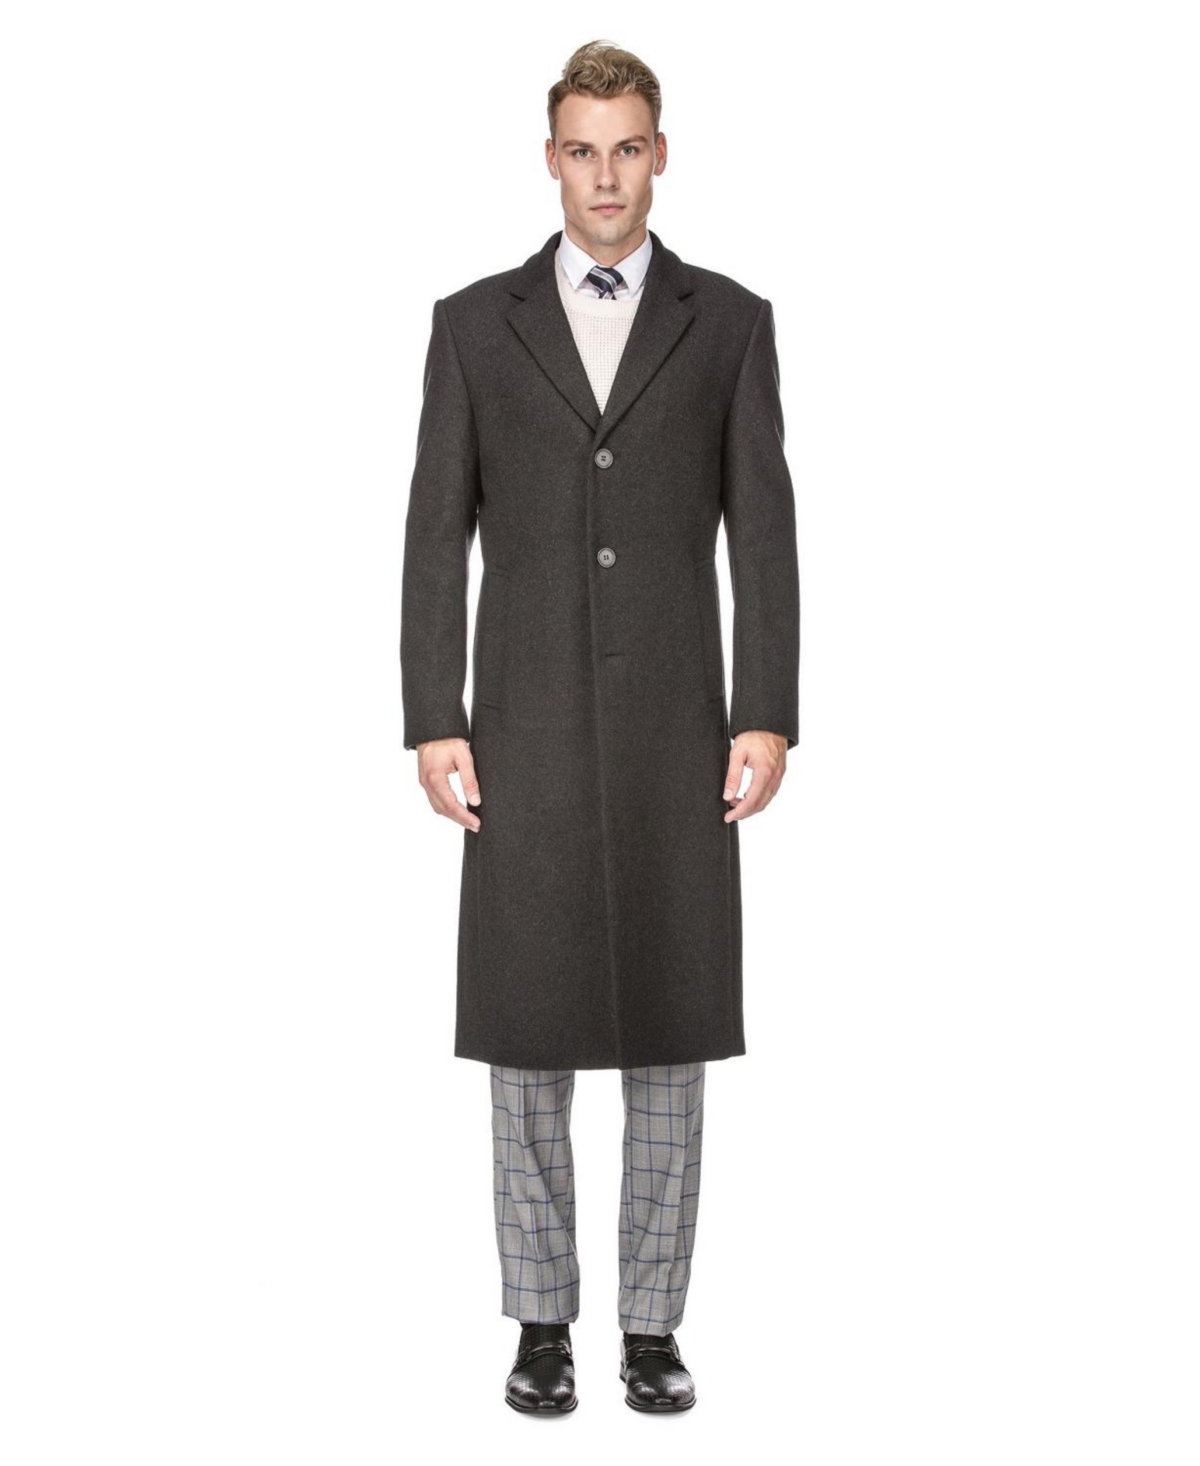 Men's Knee Length Wool Blend Three Button Long Jacket Overcoat Top Coat - Charcoal